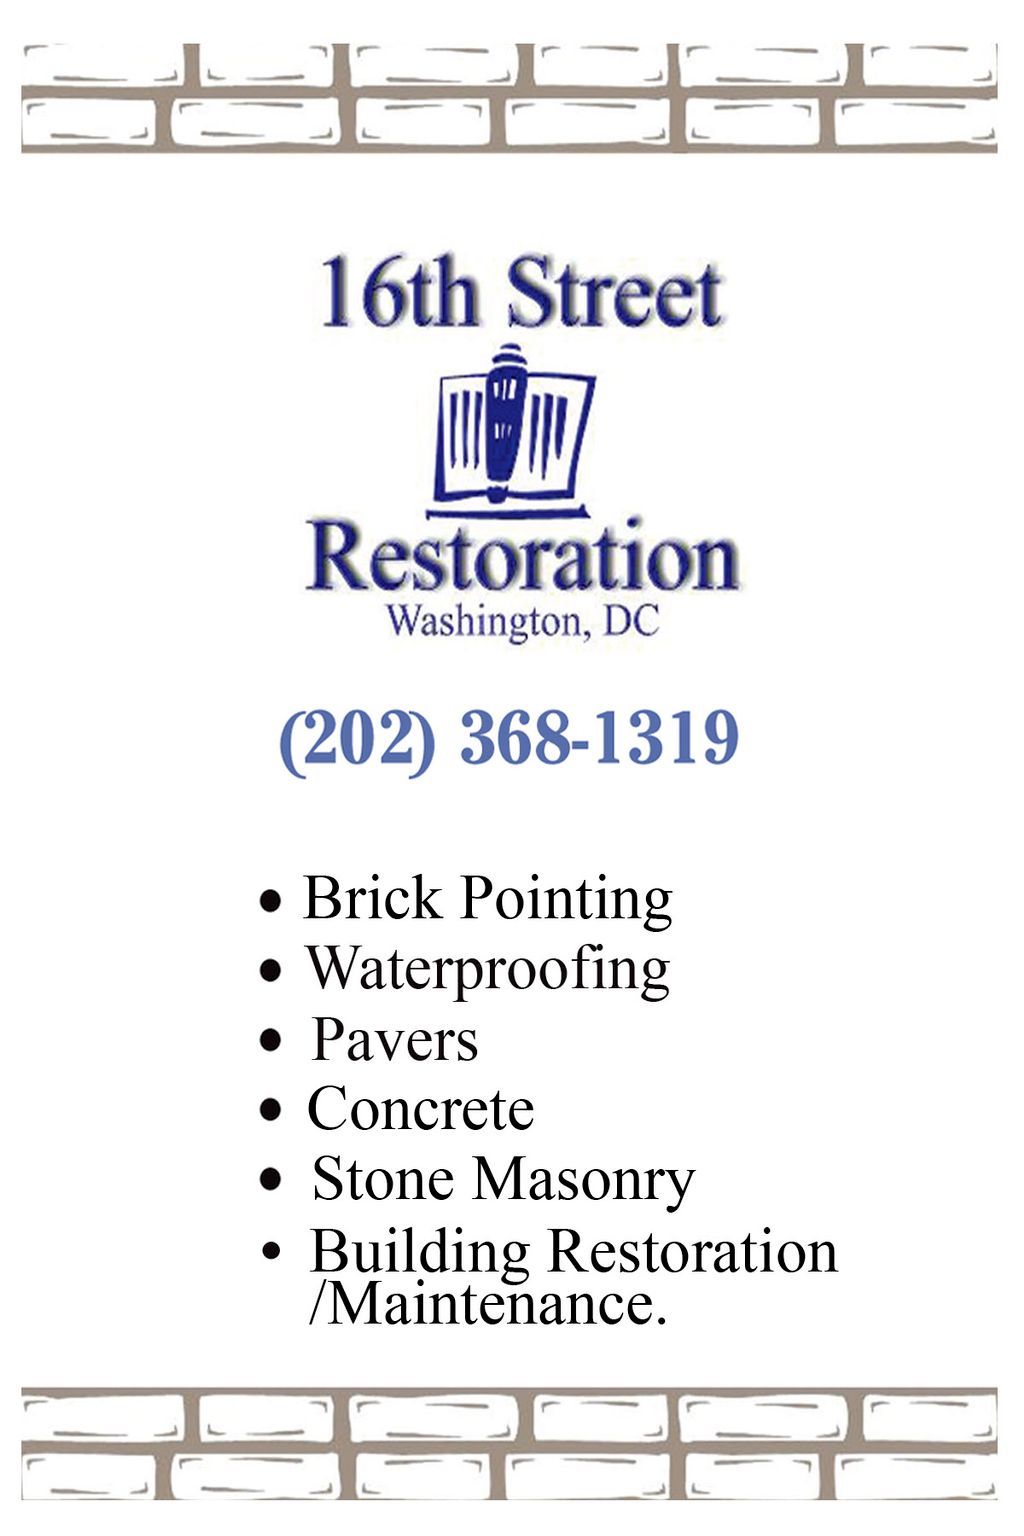 16th Street Restoration, LLC.